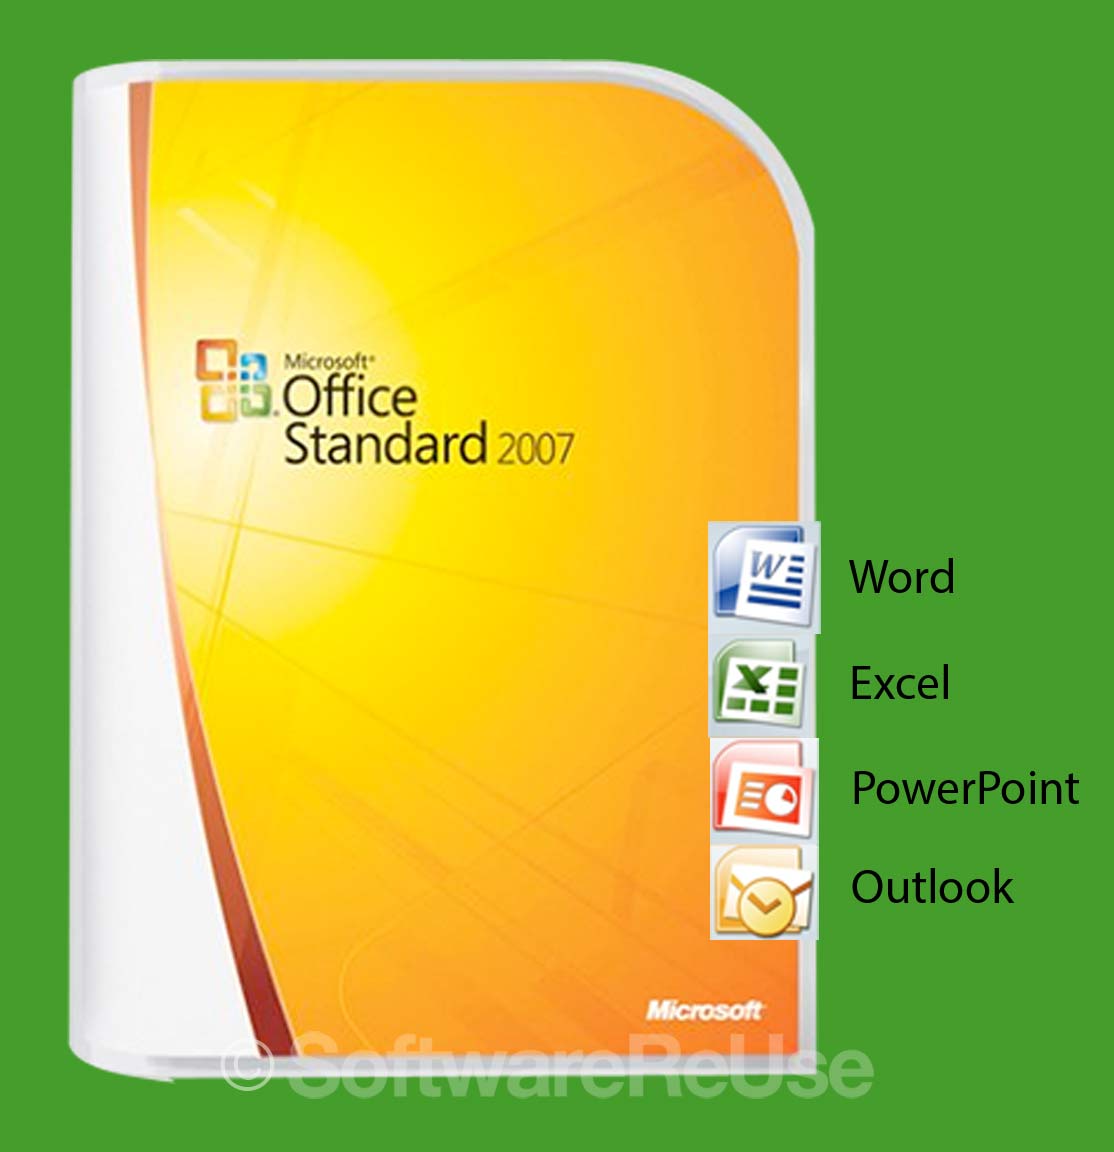 Microsoft Office Standard 2007LqbGspdnTm89y